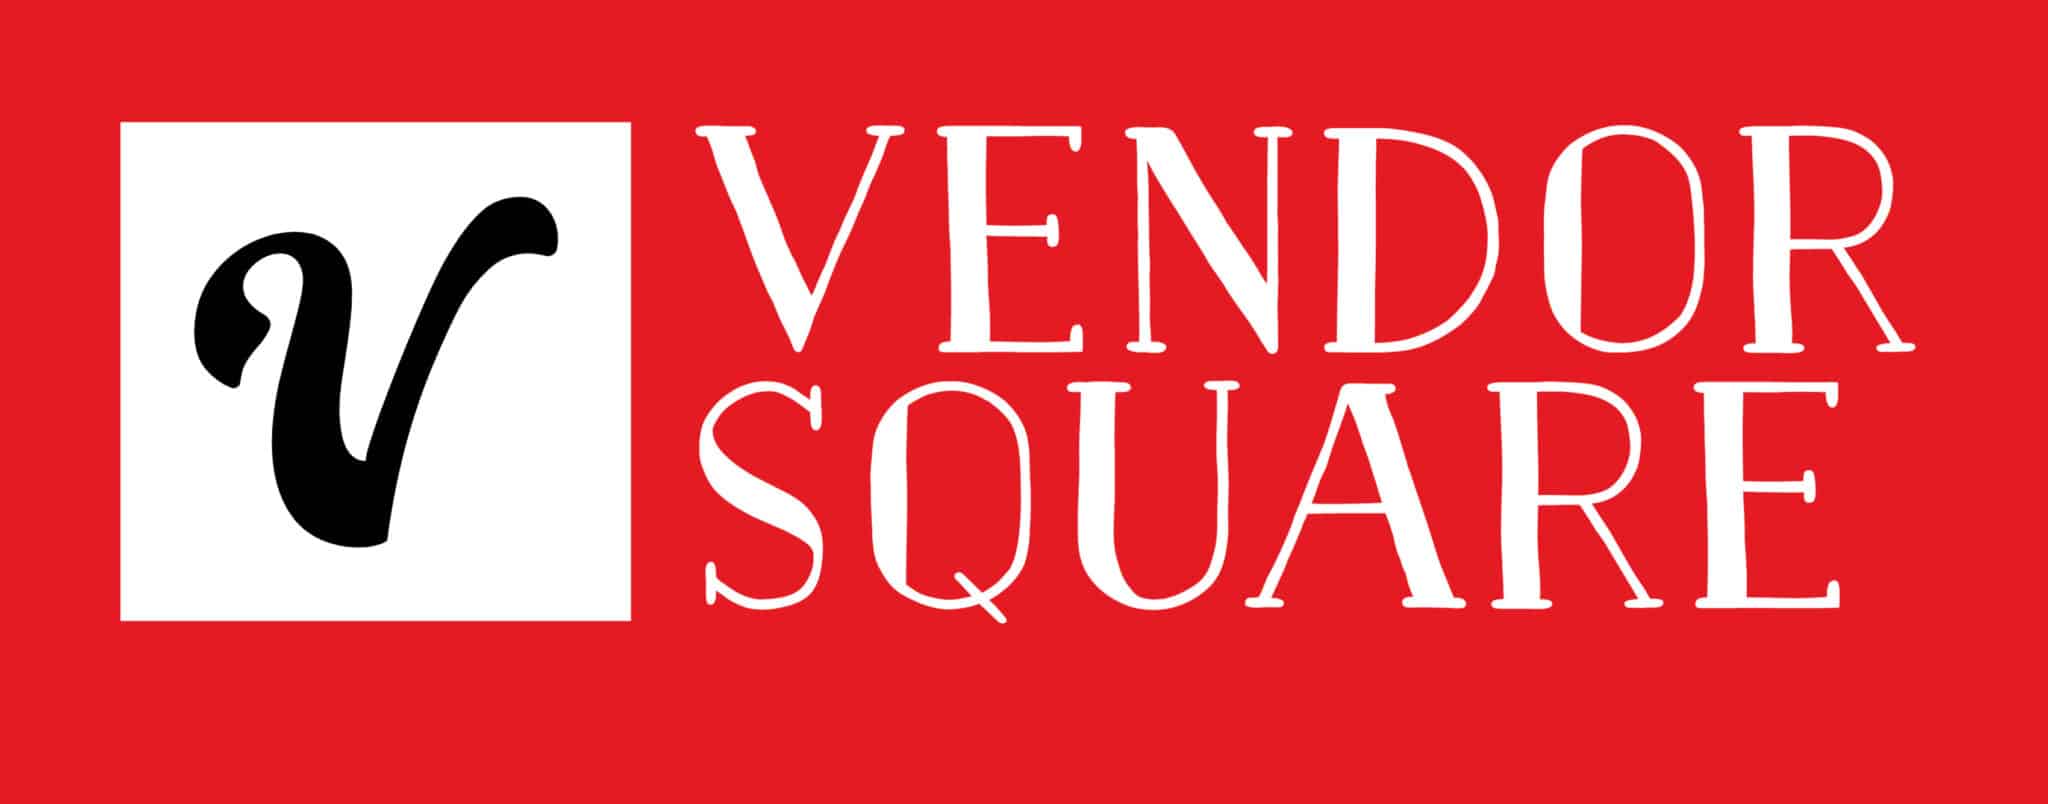 Vendor Square